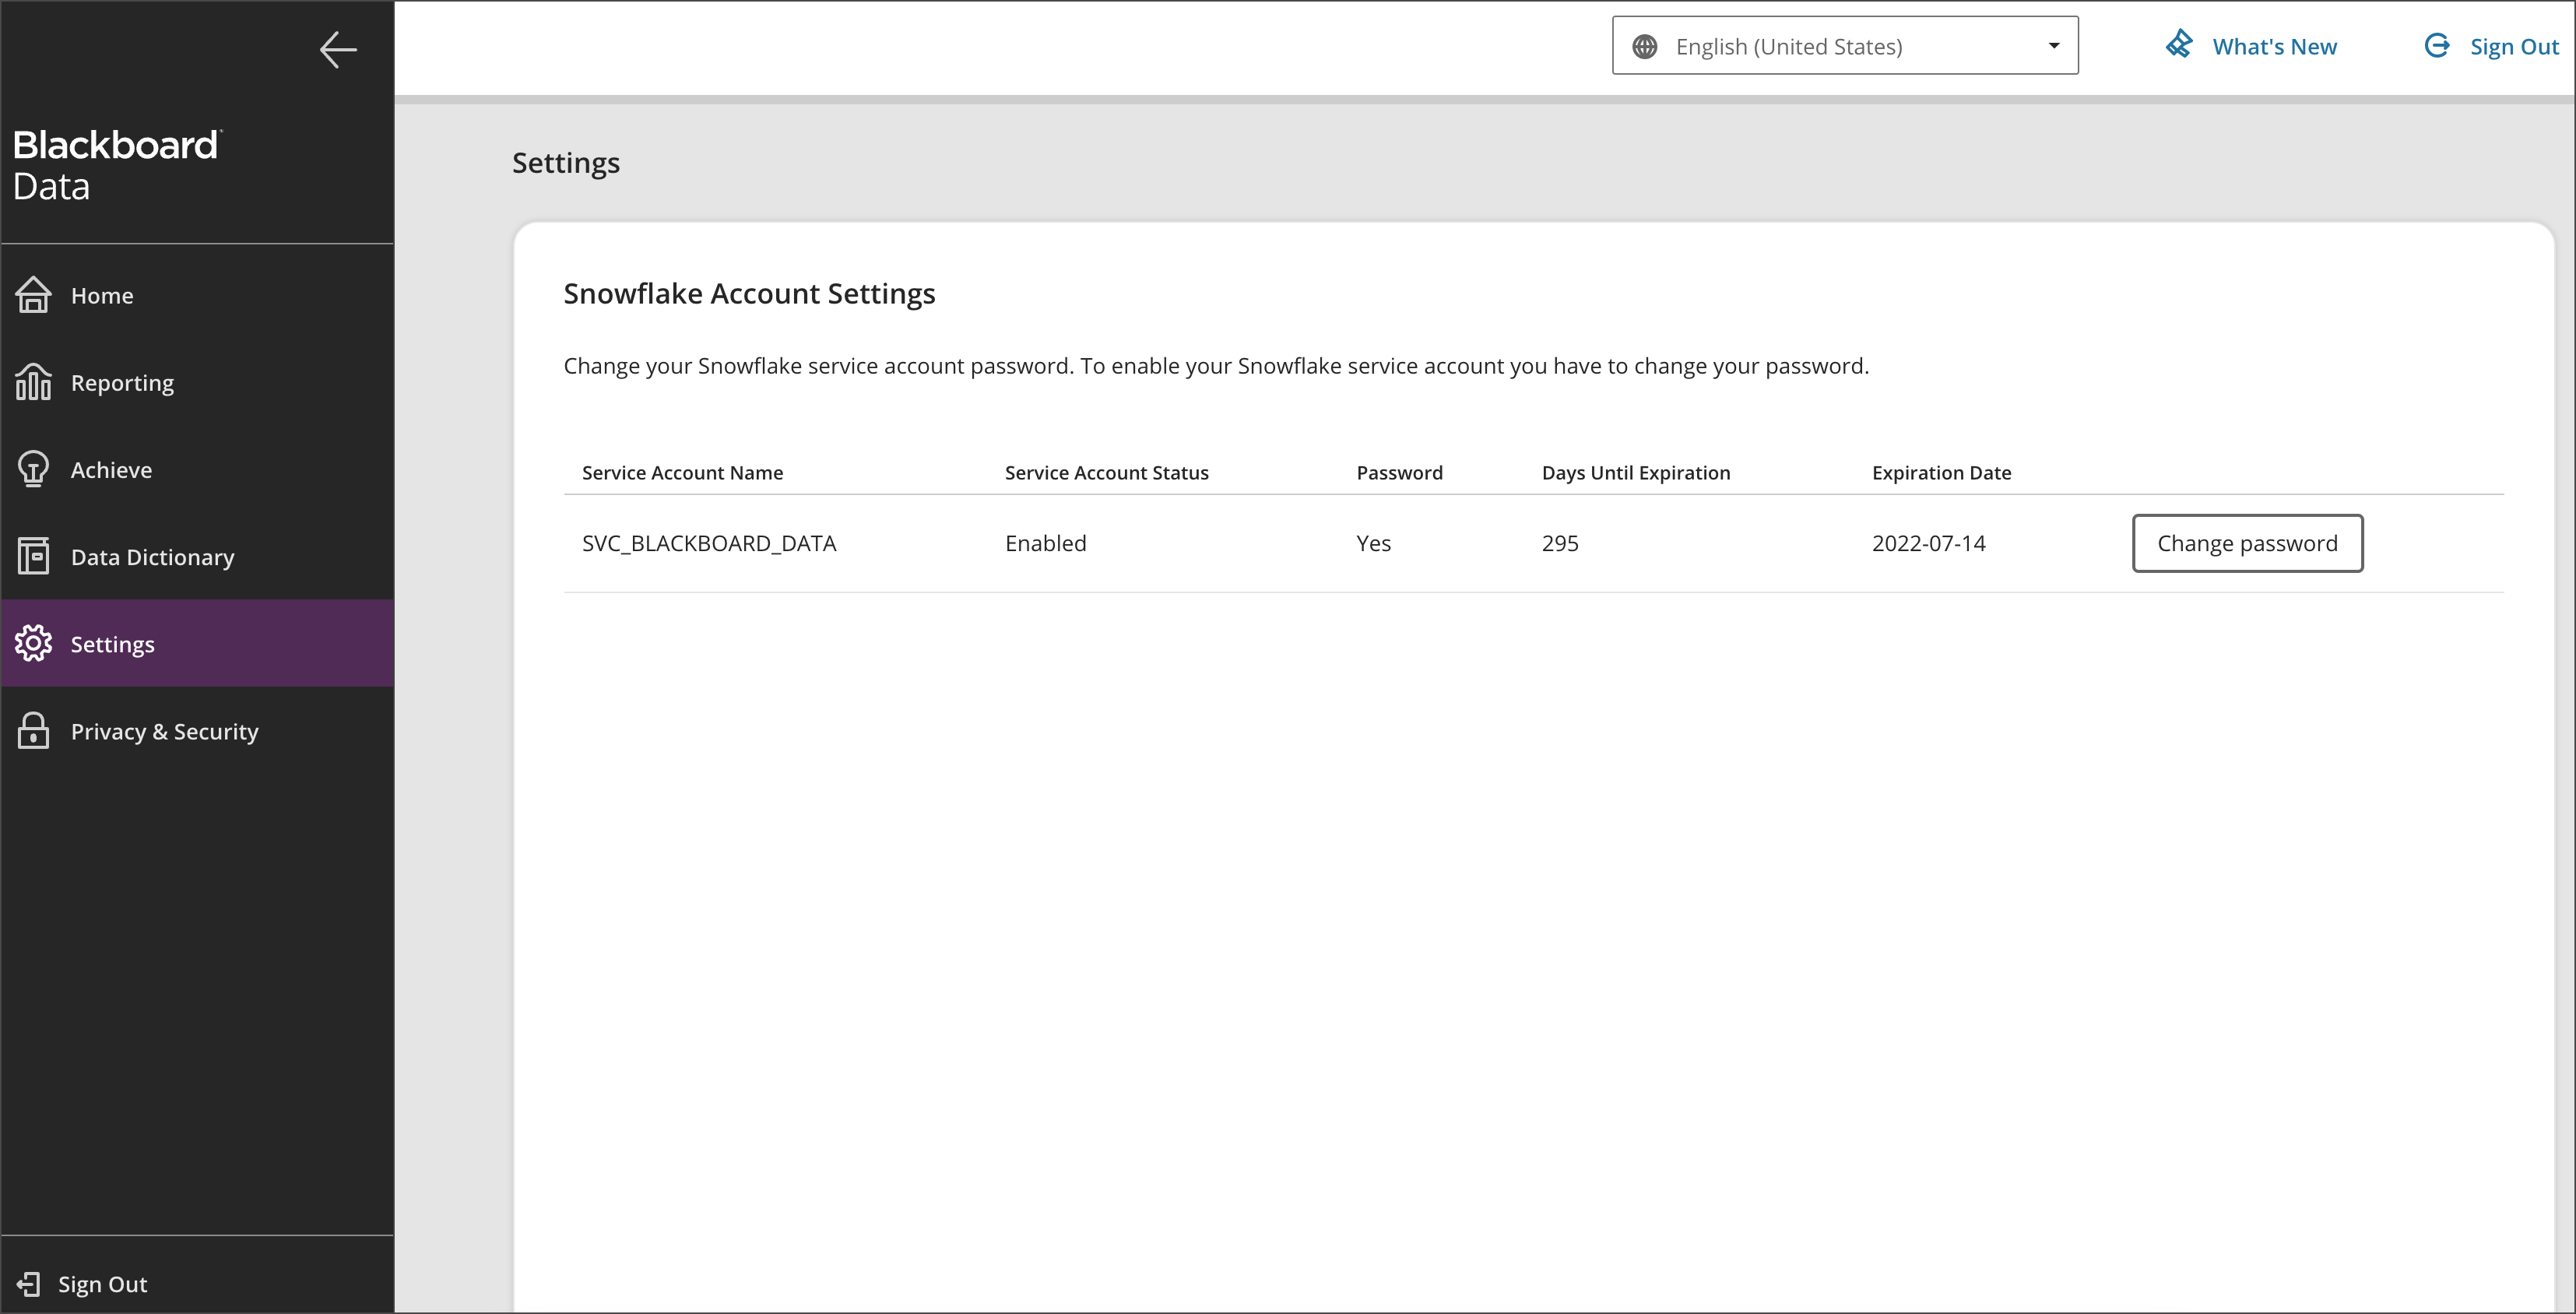 Blackboard Data's Menu Panel with Settings option selected. Snowflake Account Settings on the screen.